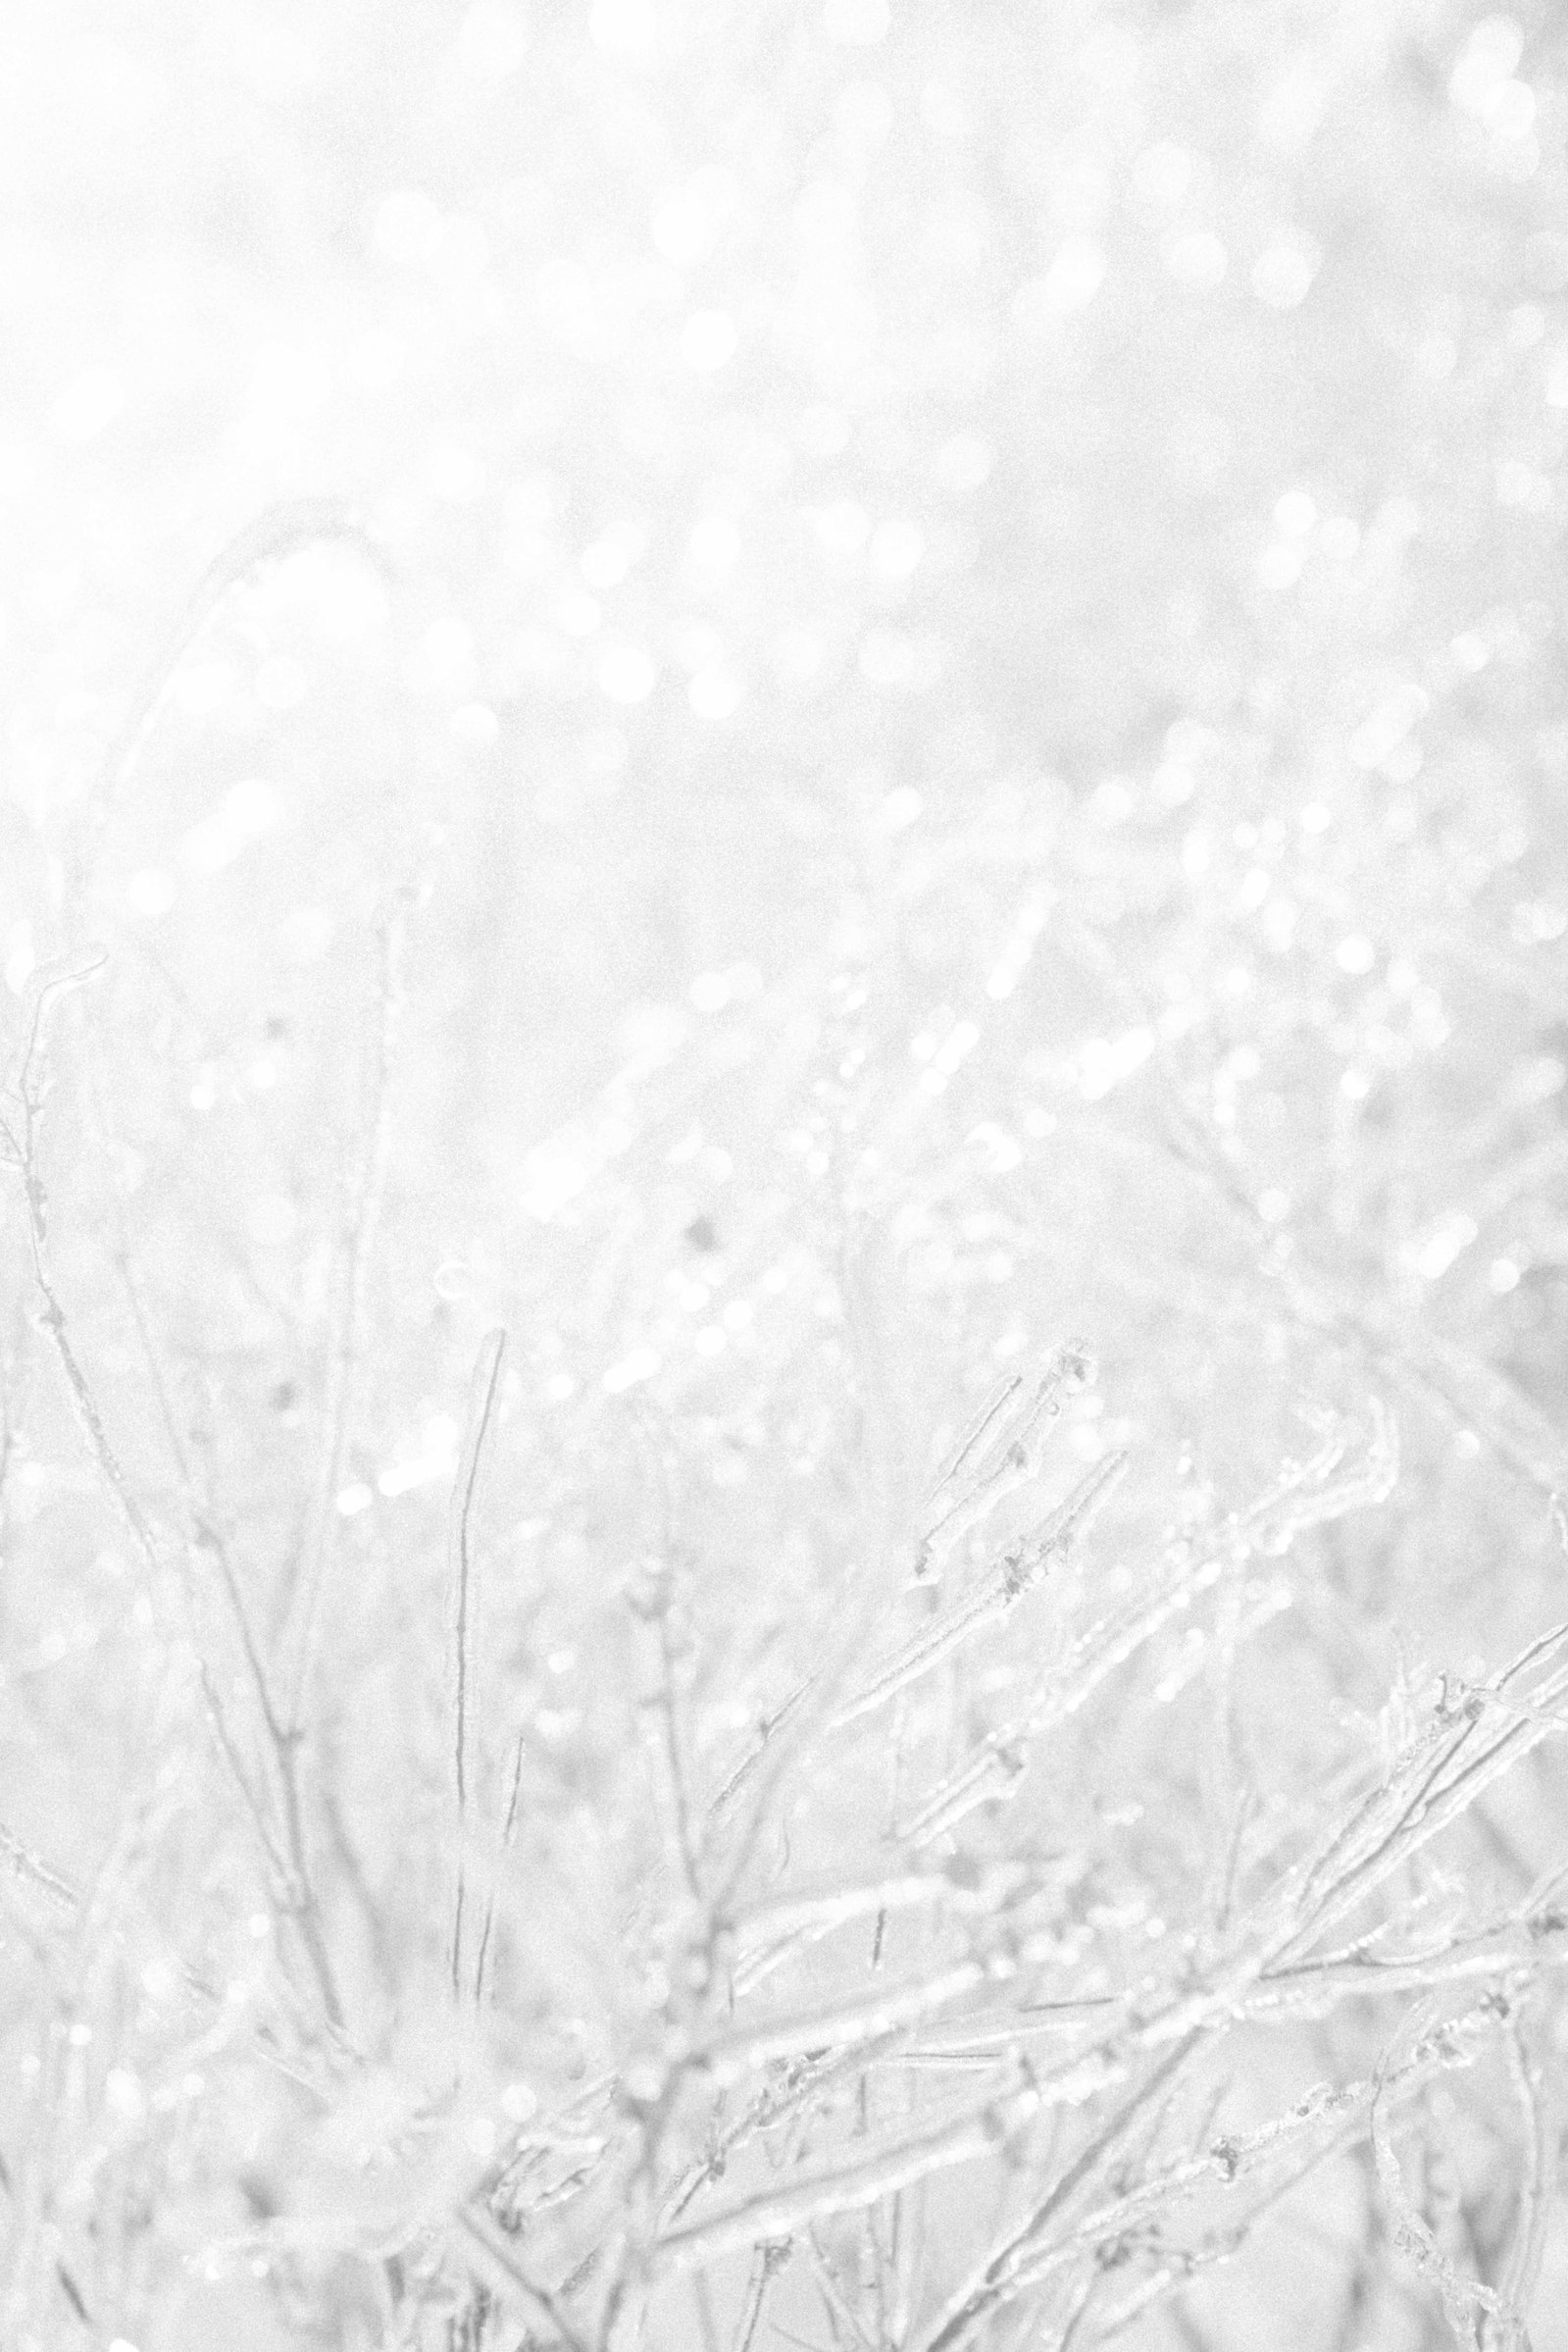 Black & white detailed photo of ice around plants. Emily VanderBeek Photography, nature photographer, Champlain Ontario, Discover Ontario, Niagara Photographer, Champlain Photographer, Vaudreuil-Soulanges Photographer.